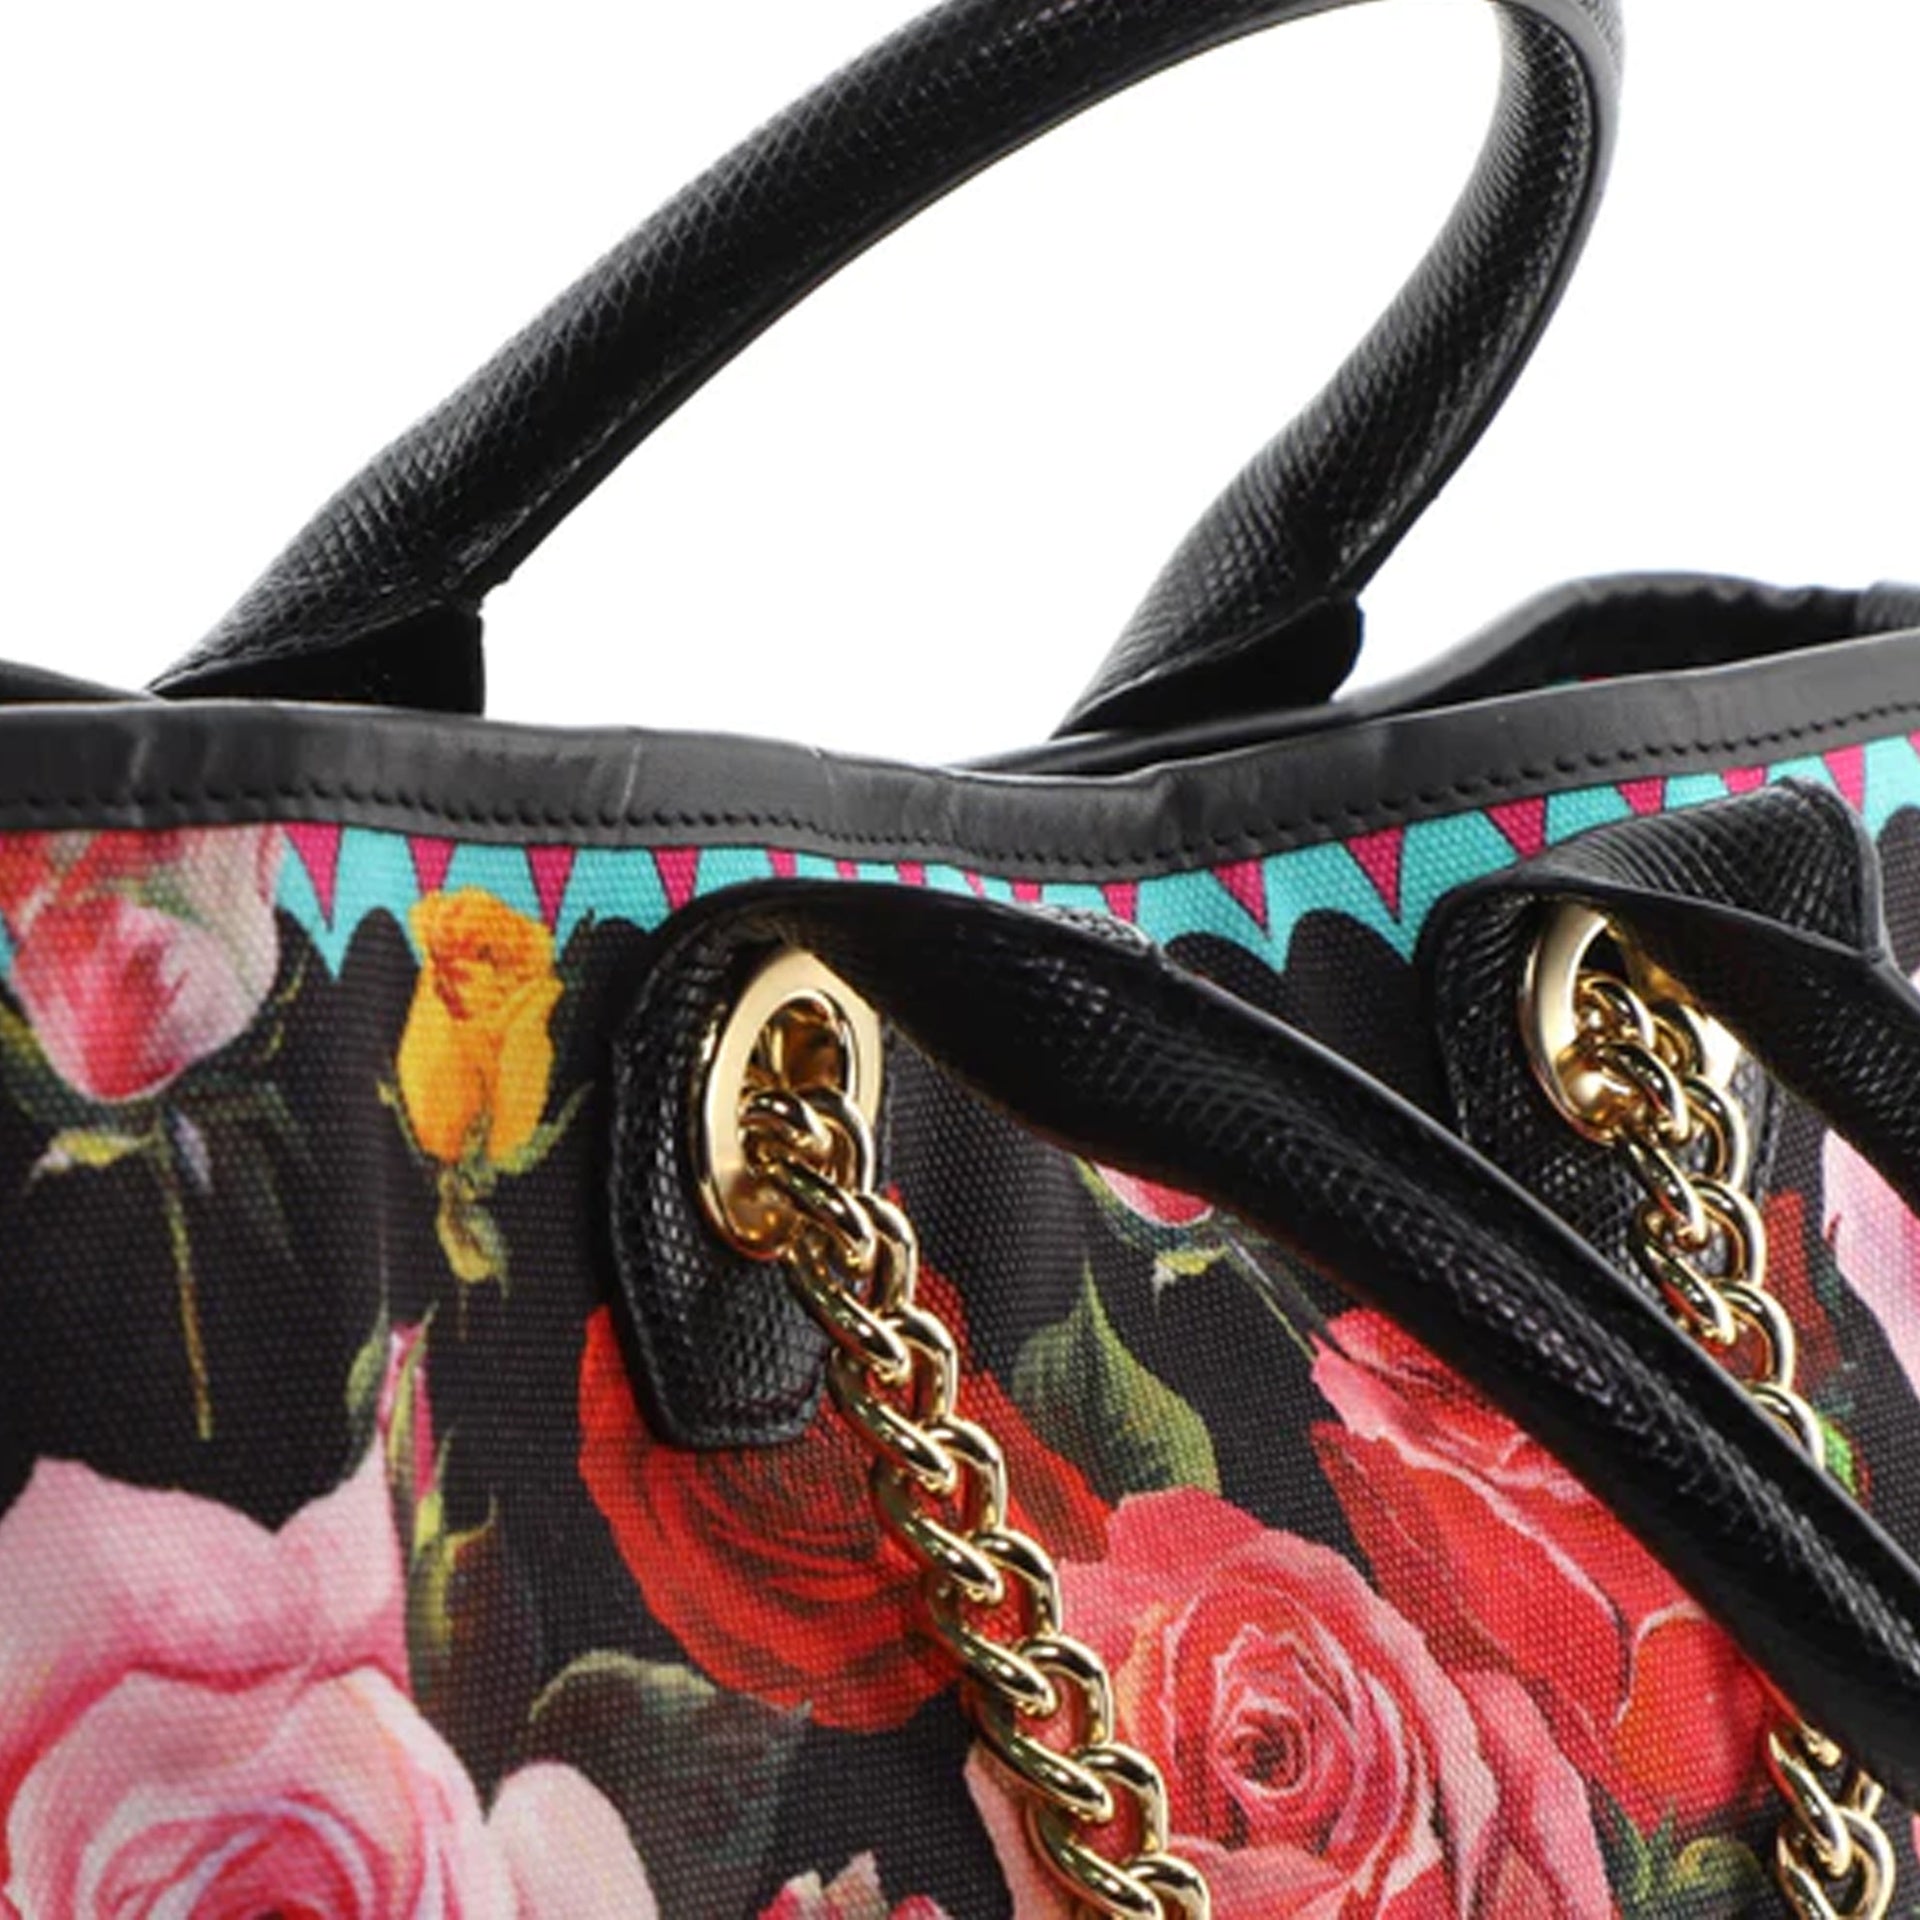 Dolce & Gabbana Flower-Print Tote Bag